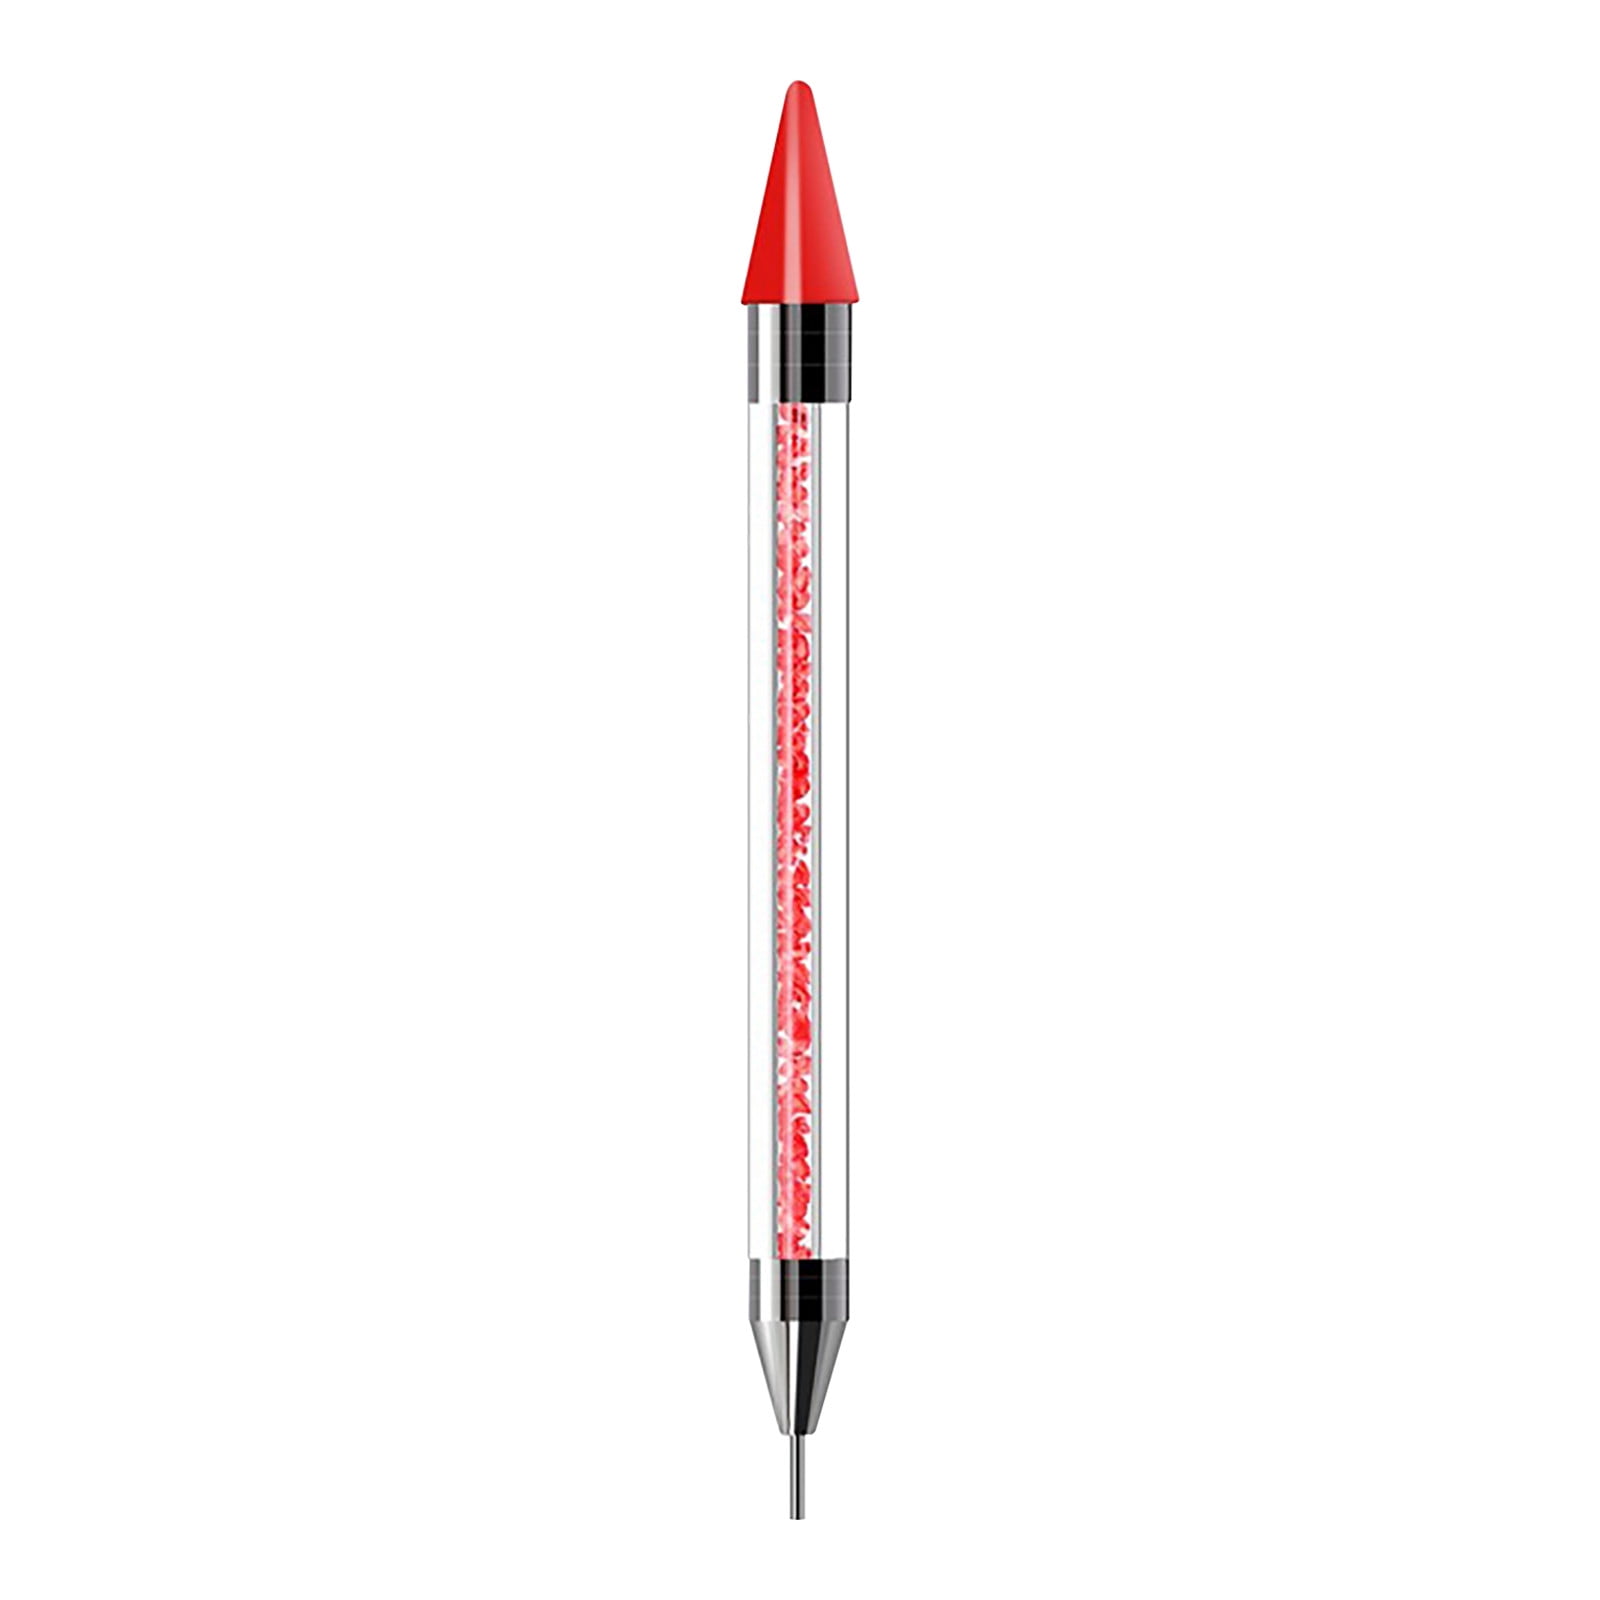 Rhinestone Wax Pen, Dual-Ended Nail Dotting Pen